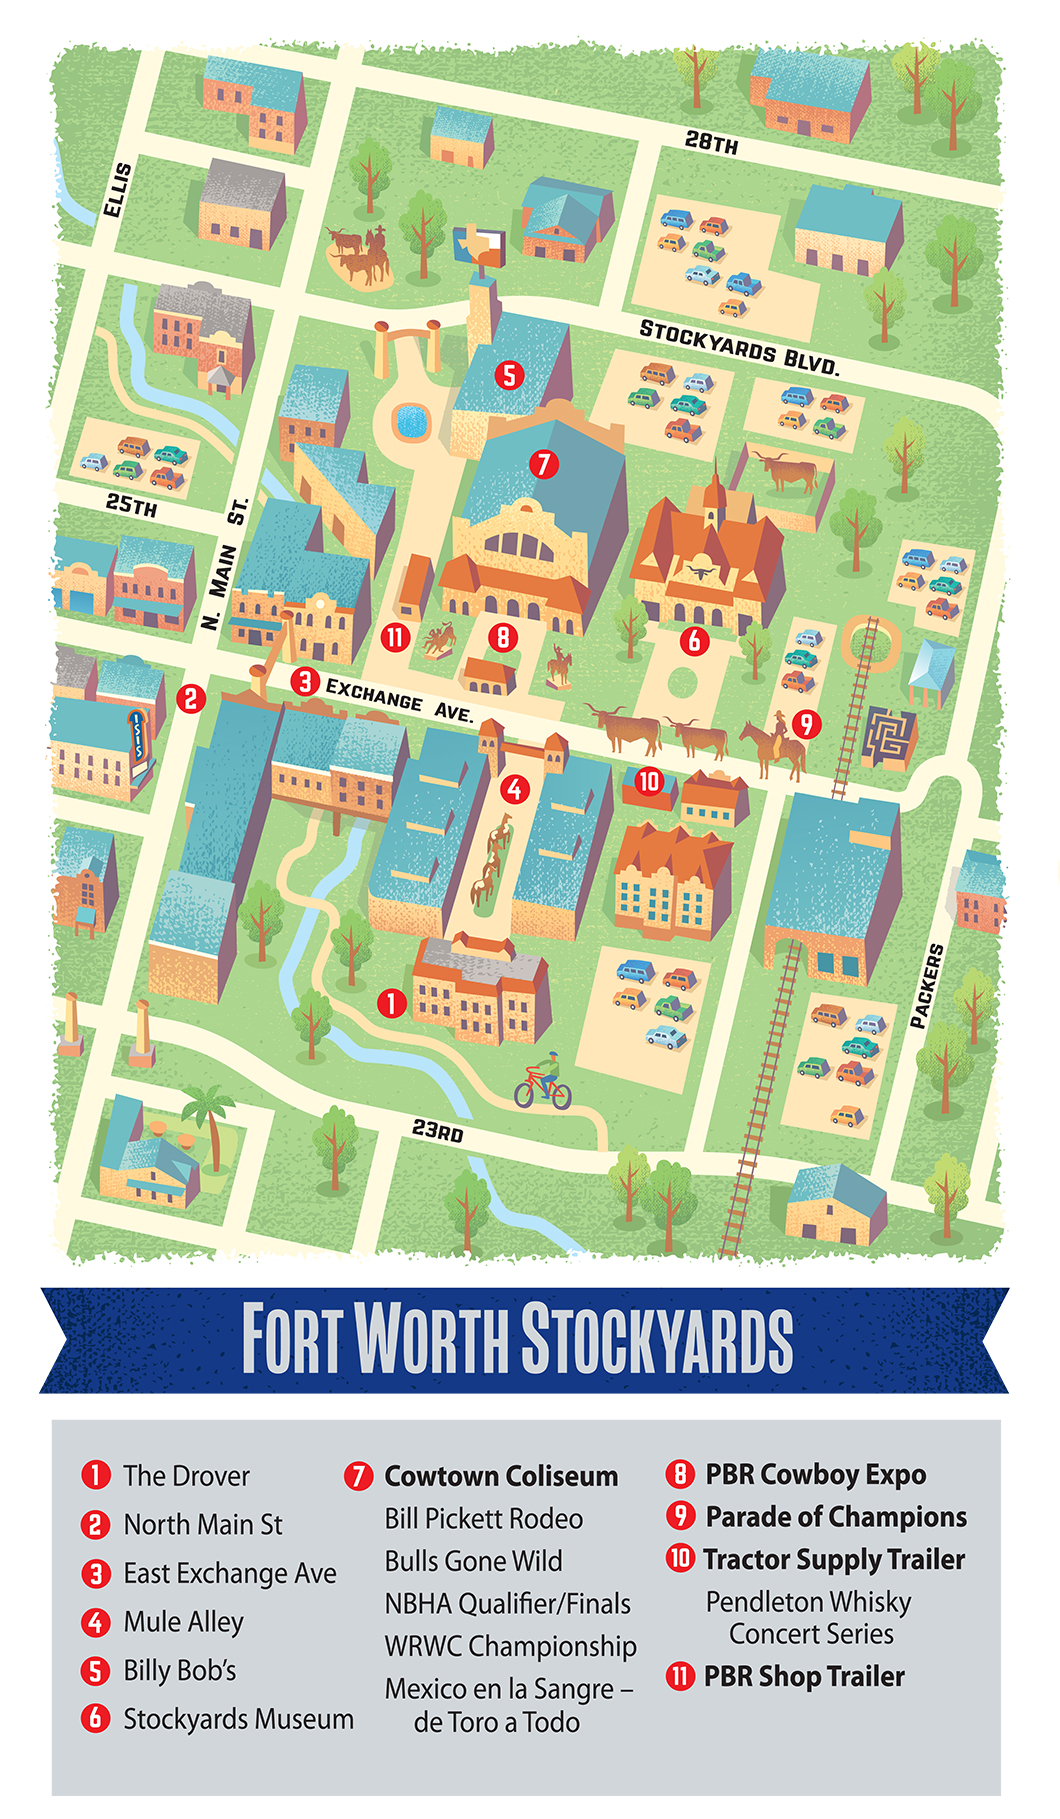 <div style="margin-left:20px;">Fort Worth Stockyards</div>